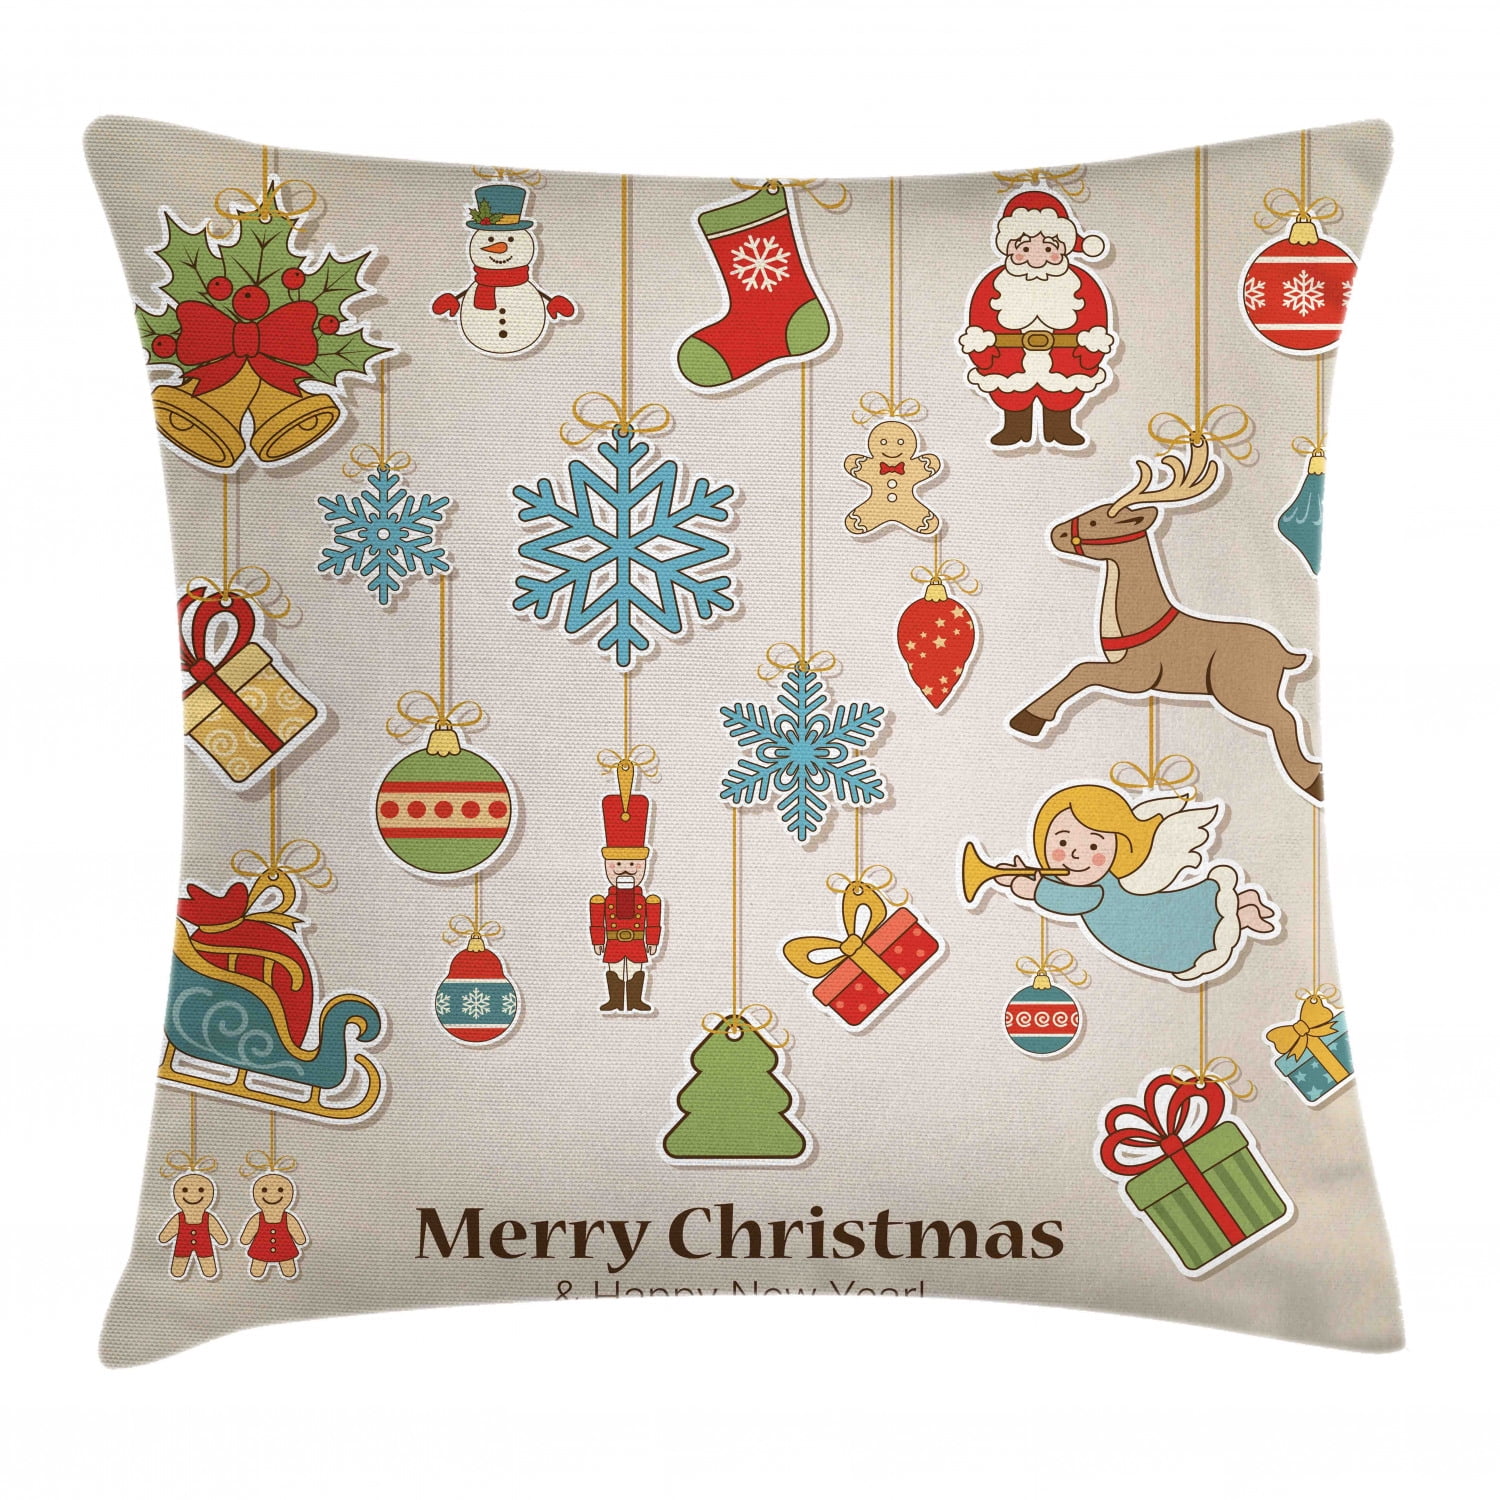 Christmas Throw Pillow Cushion Cover, Xmas Winter Holiday Themed Icons Celebratory Objects Retro